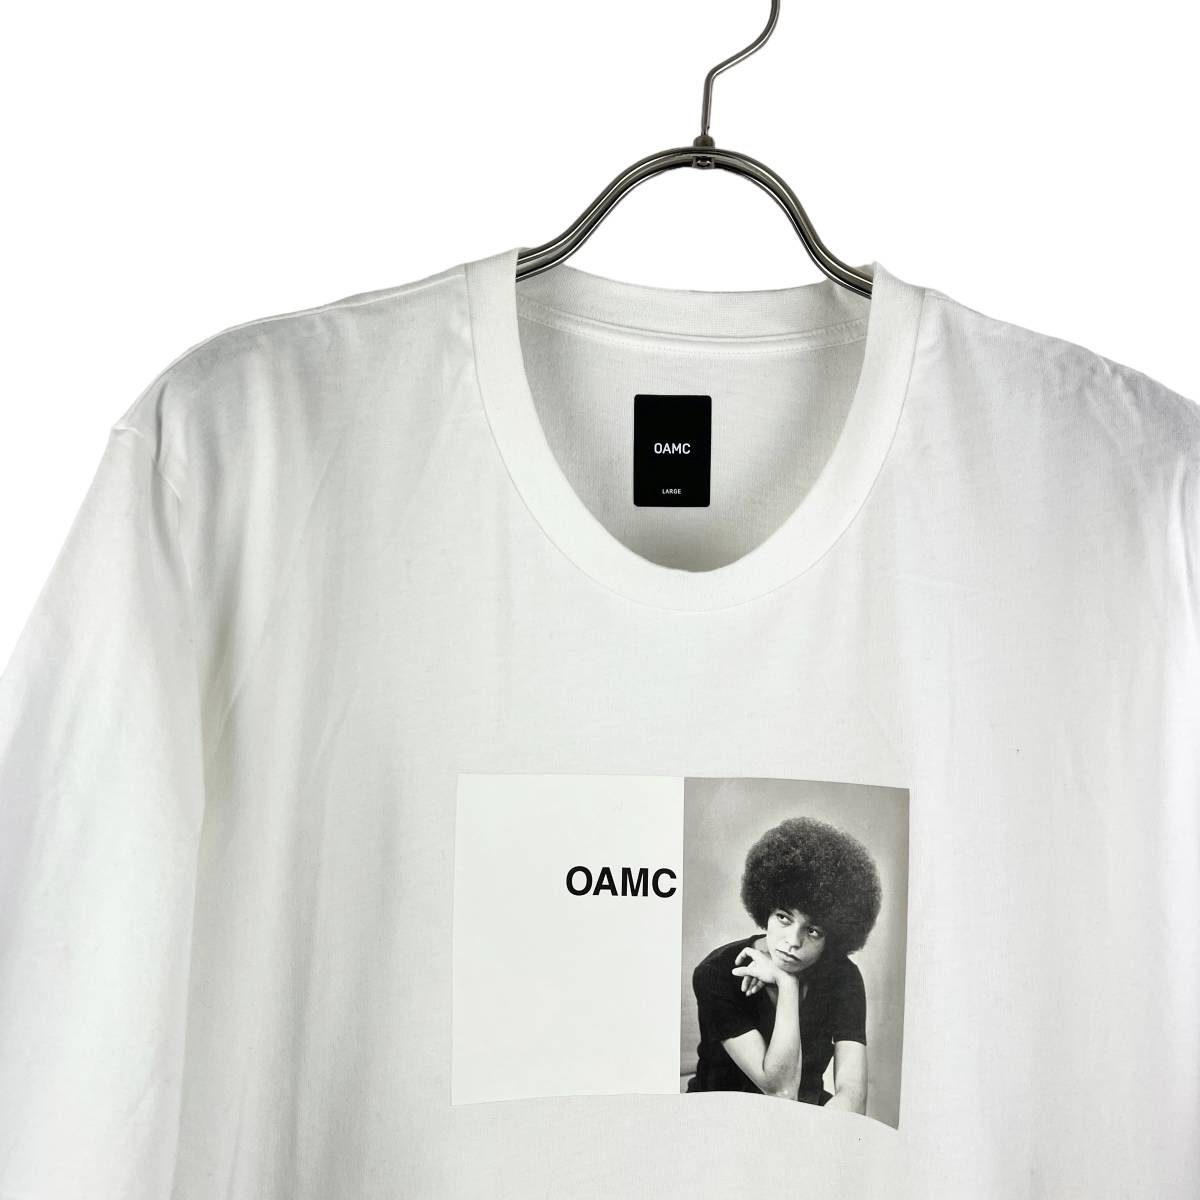 OAMC(オーエーエムシー) Female Portrait Pattern Cotton T Shirt